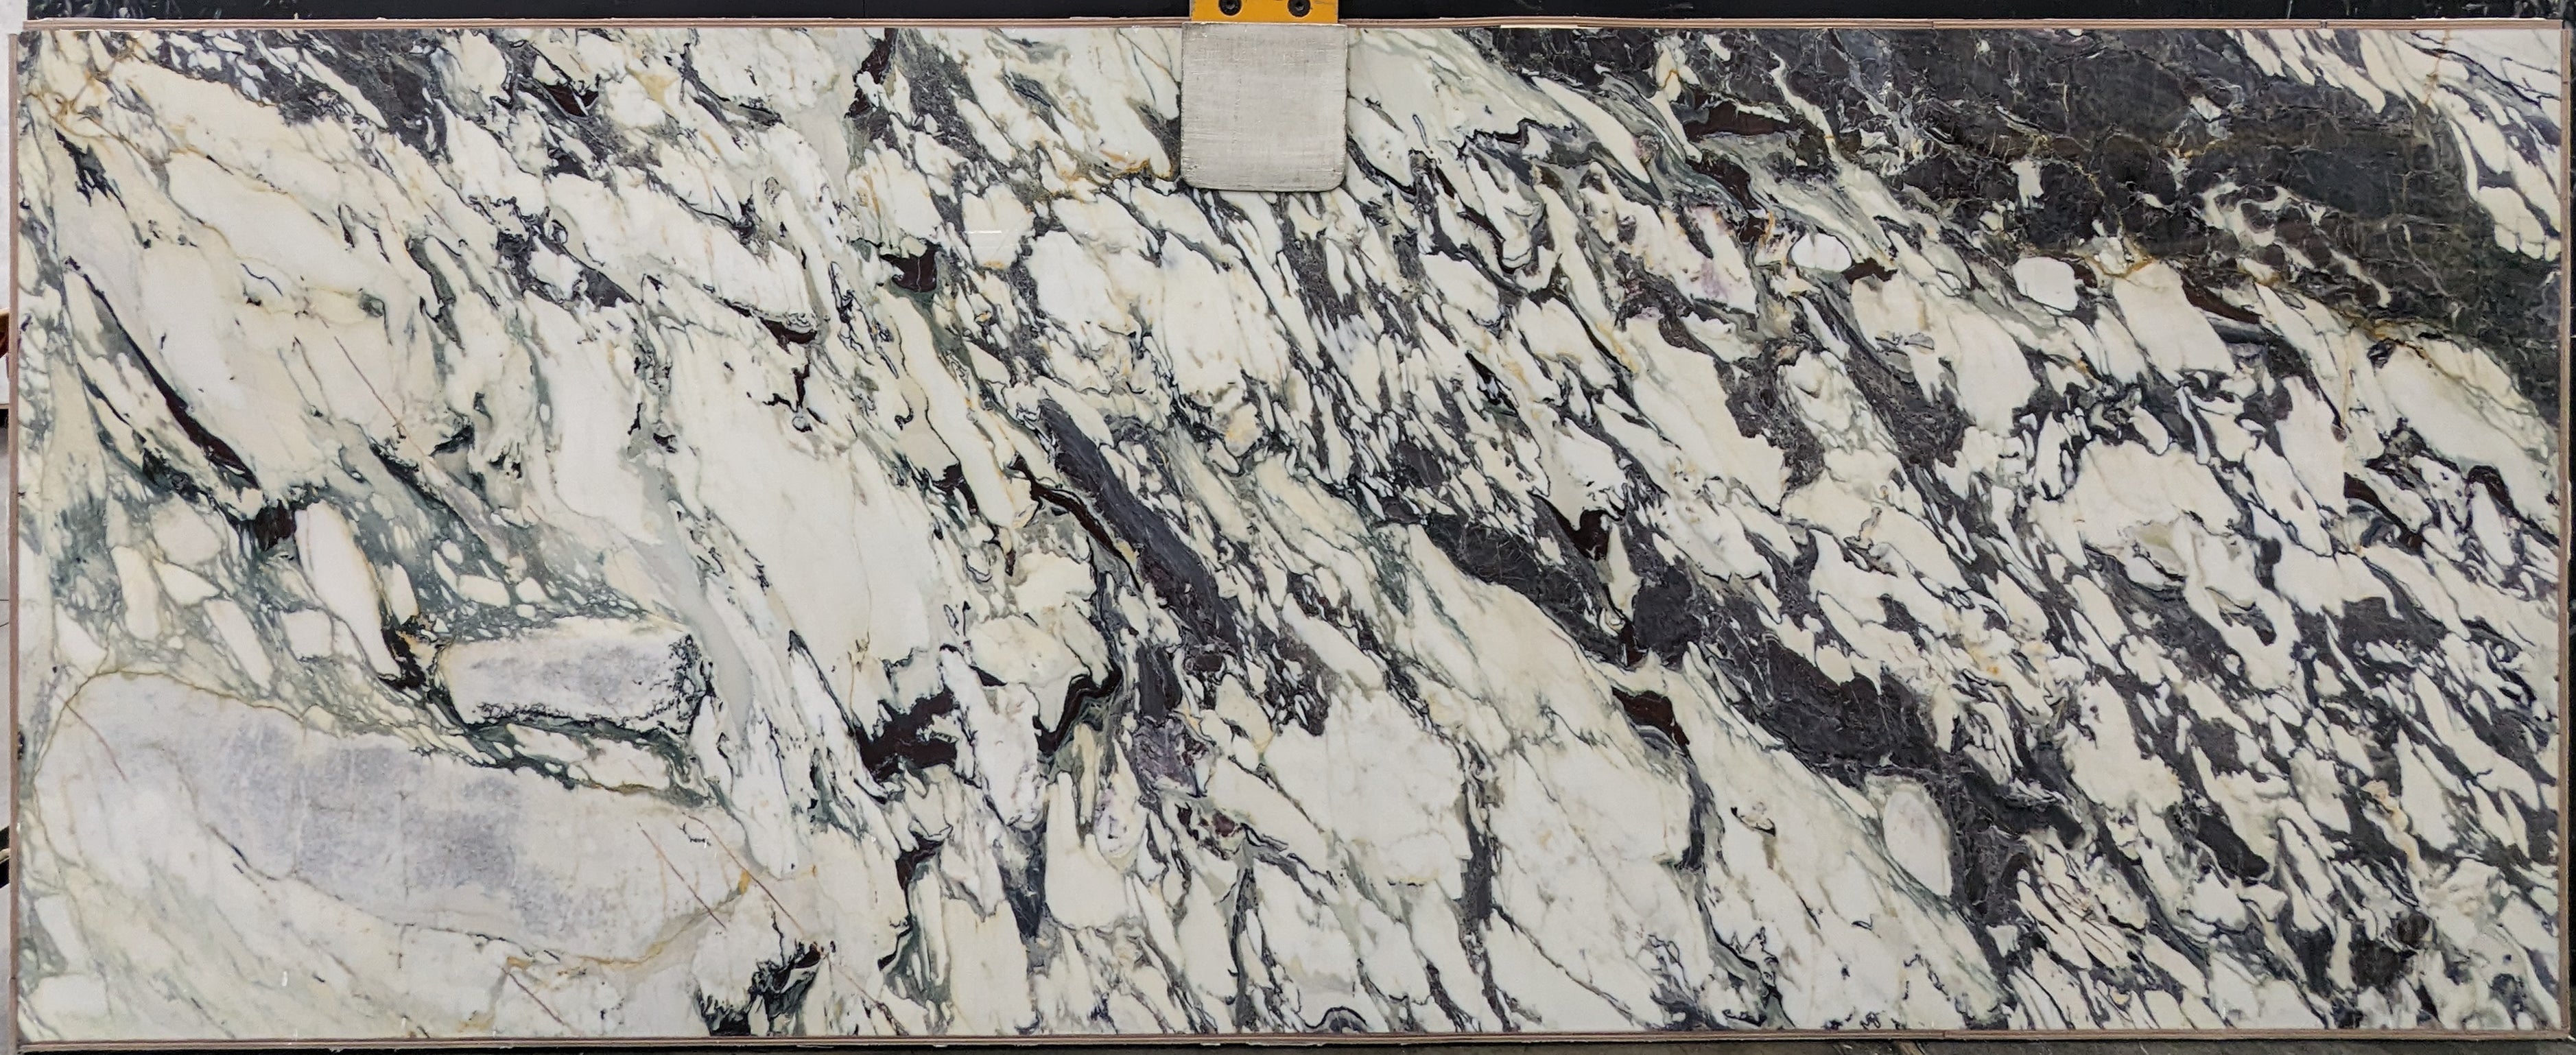  Breccia Capraia Marble Slab 3/4  Polished Stone - 96115#57 -  49x129 